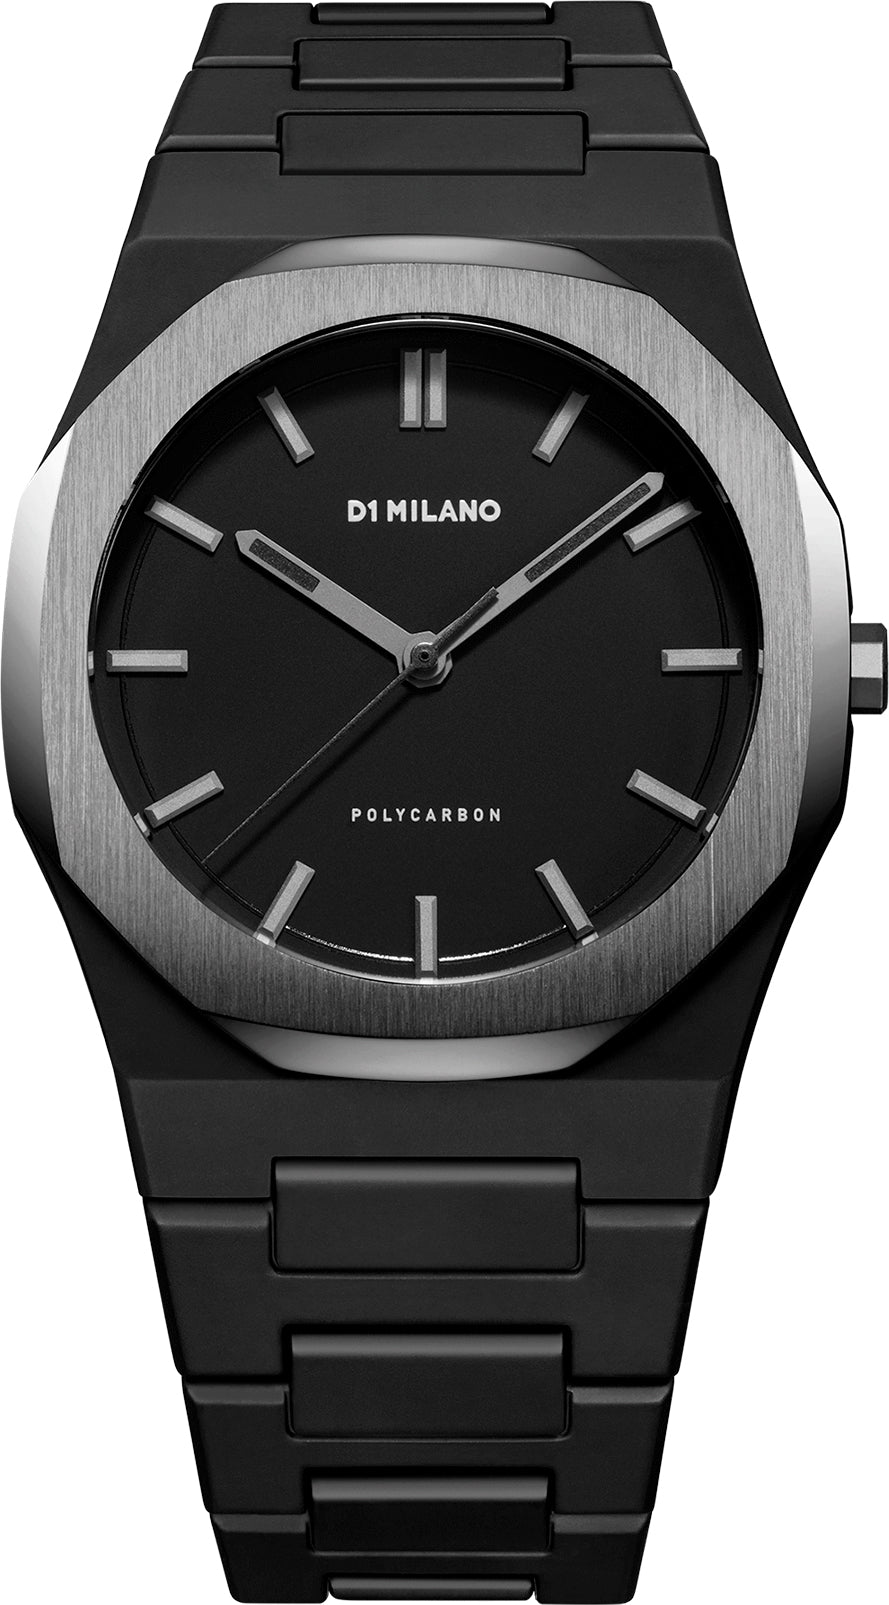 Photos - Wrist Watch D1 Milano Watch Polycarbon DLM-026 